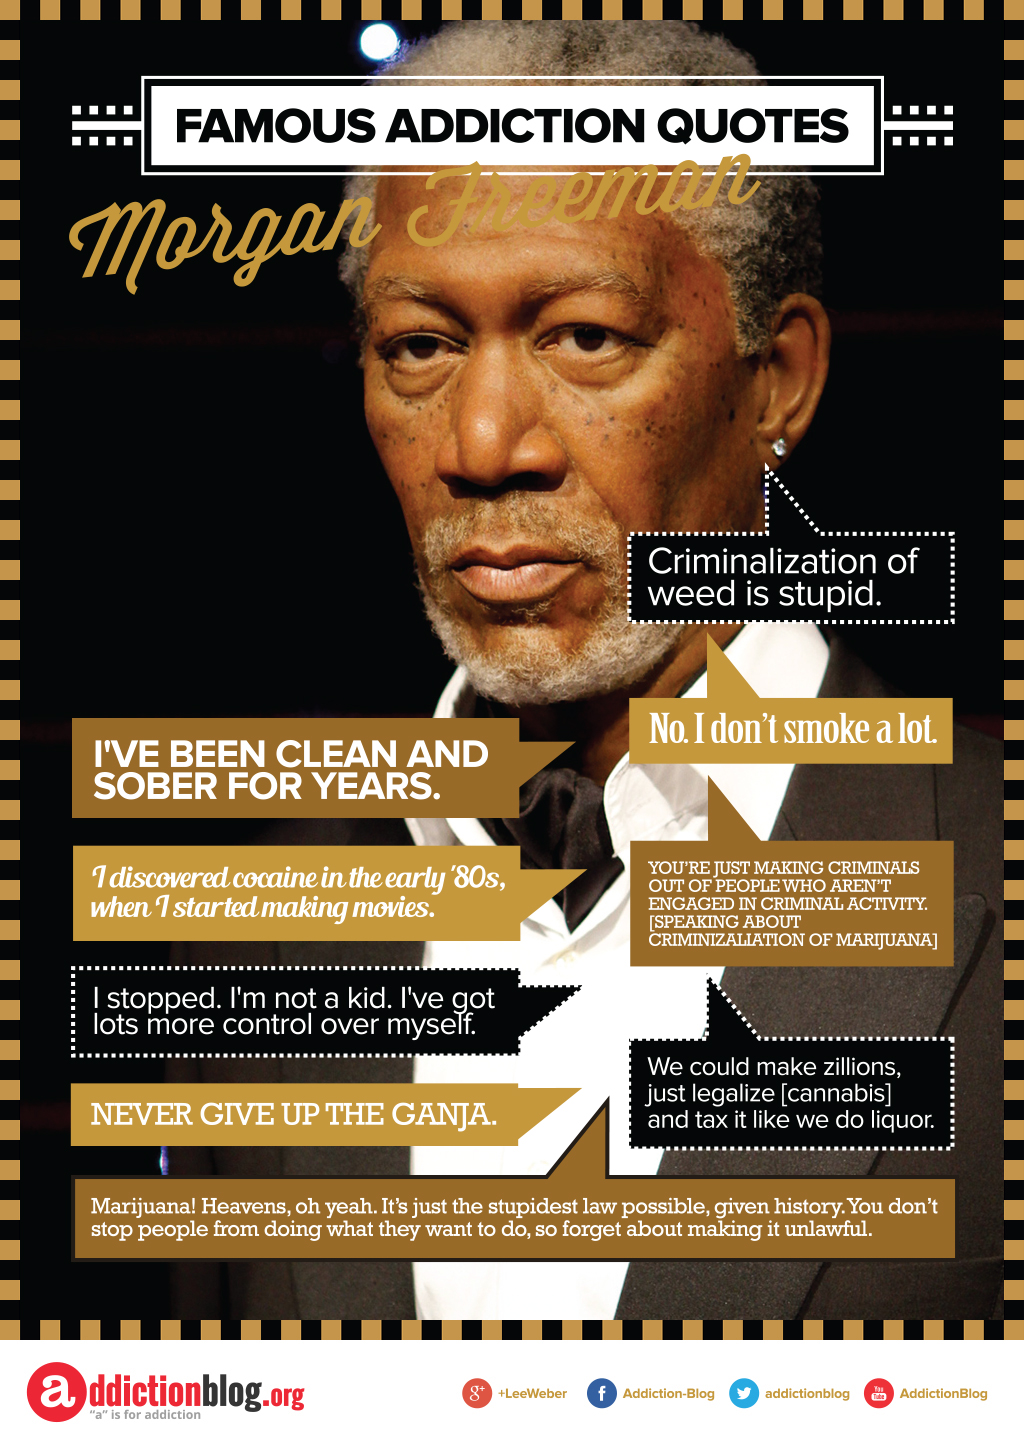 Morgan Freeman on smoking marijuana and legalization (INFOGRAPHIC)